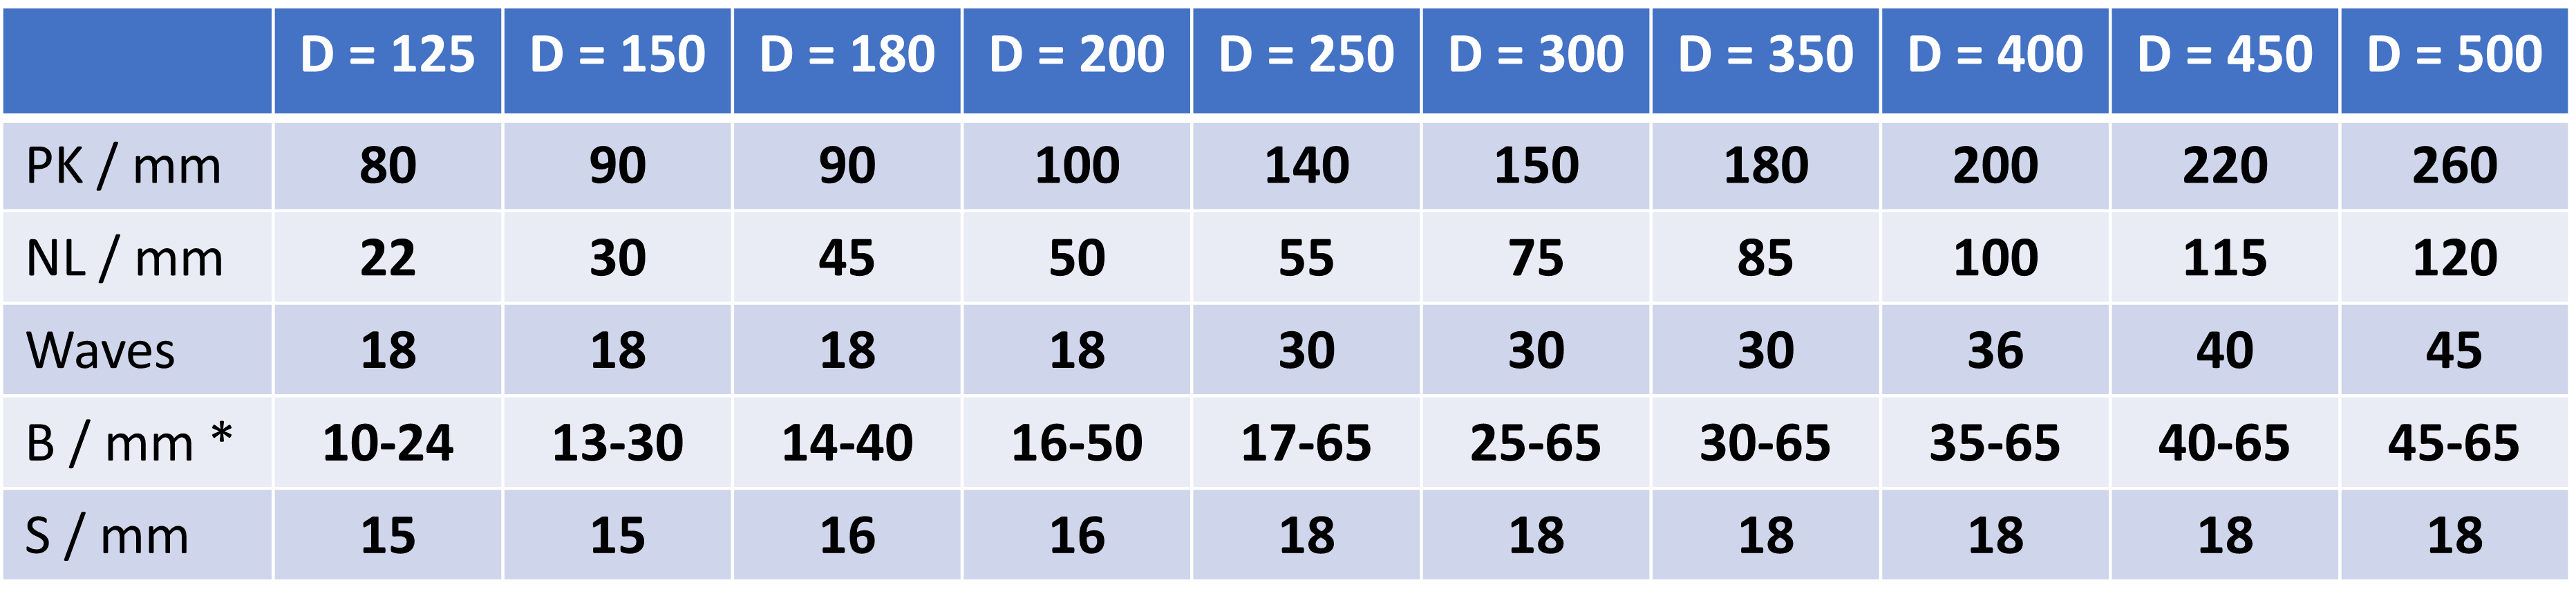 REX Corrugated Dimension Table